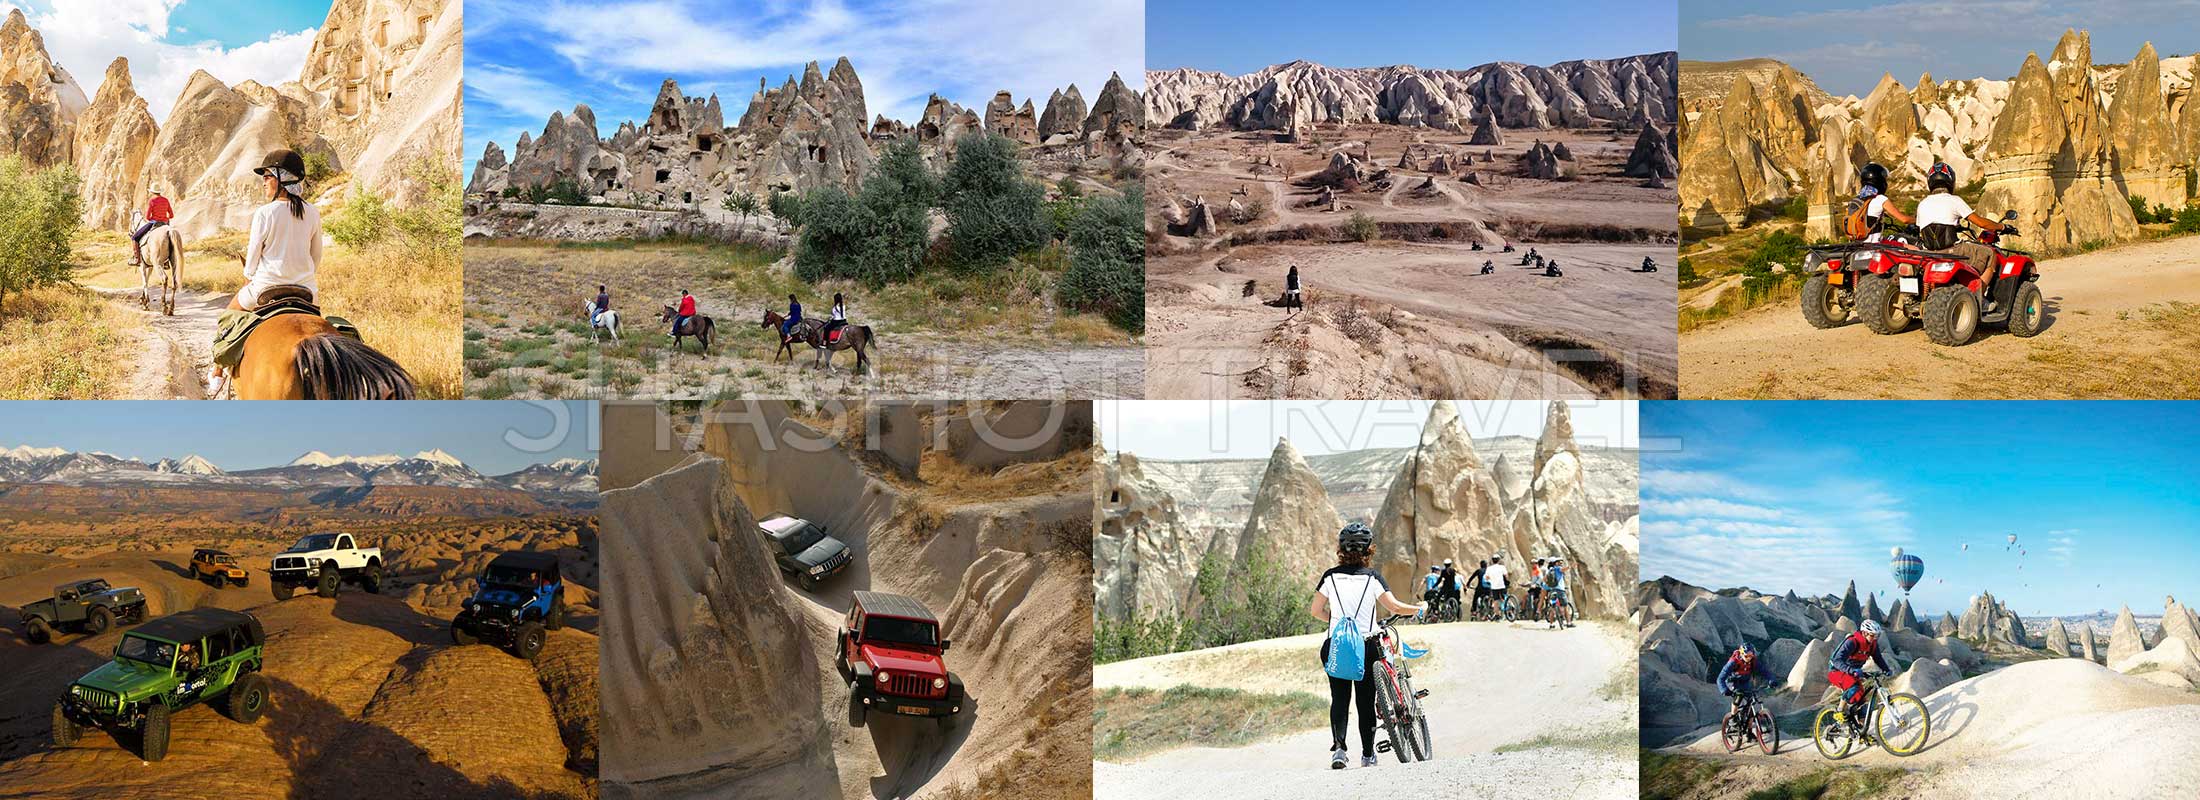 cappadocia-turkey-alternative-outdoor-tours-Horse-Riding-atv-jeep-safari-Cycling-Tours